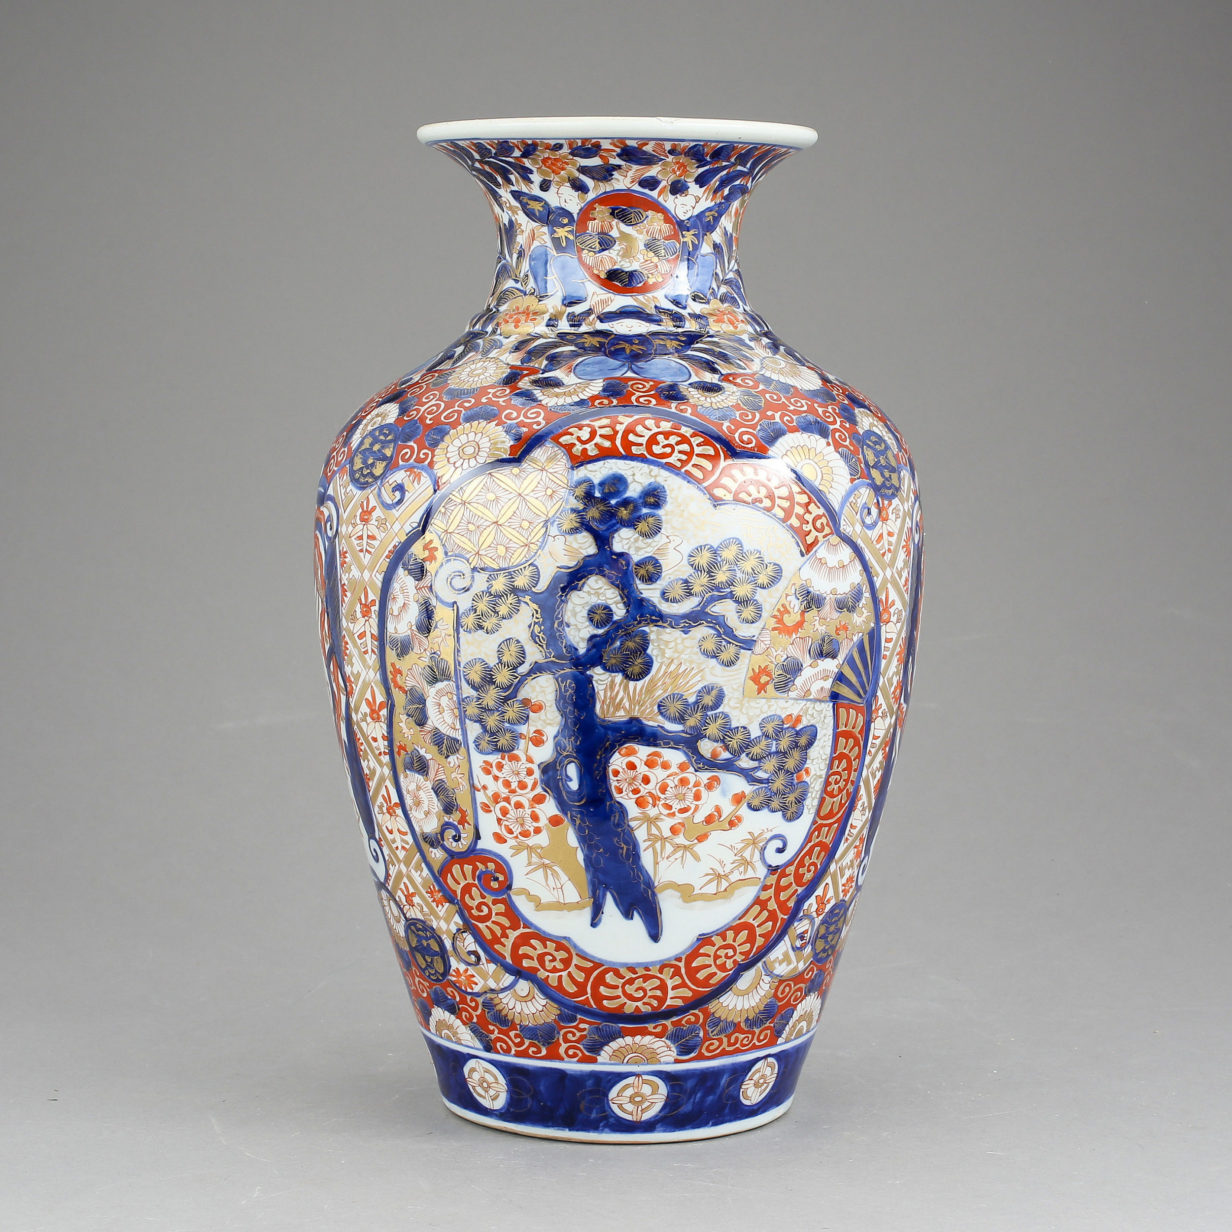 A 19th century imari baluster porcelain vase